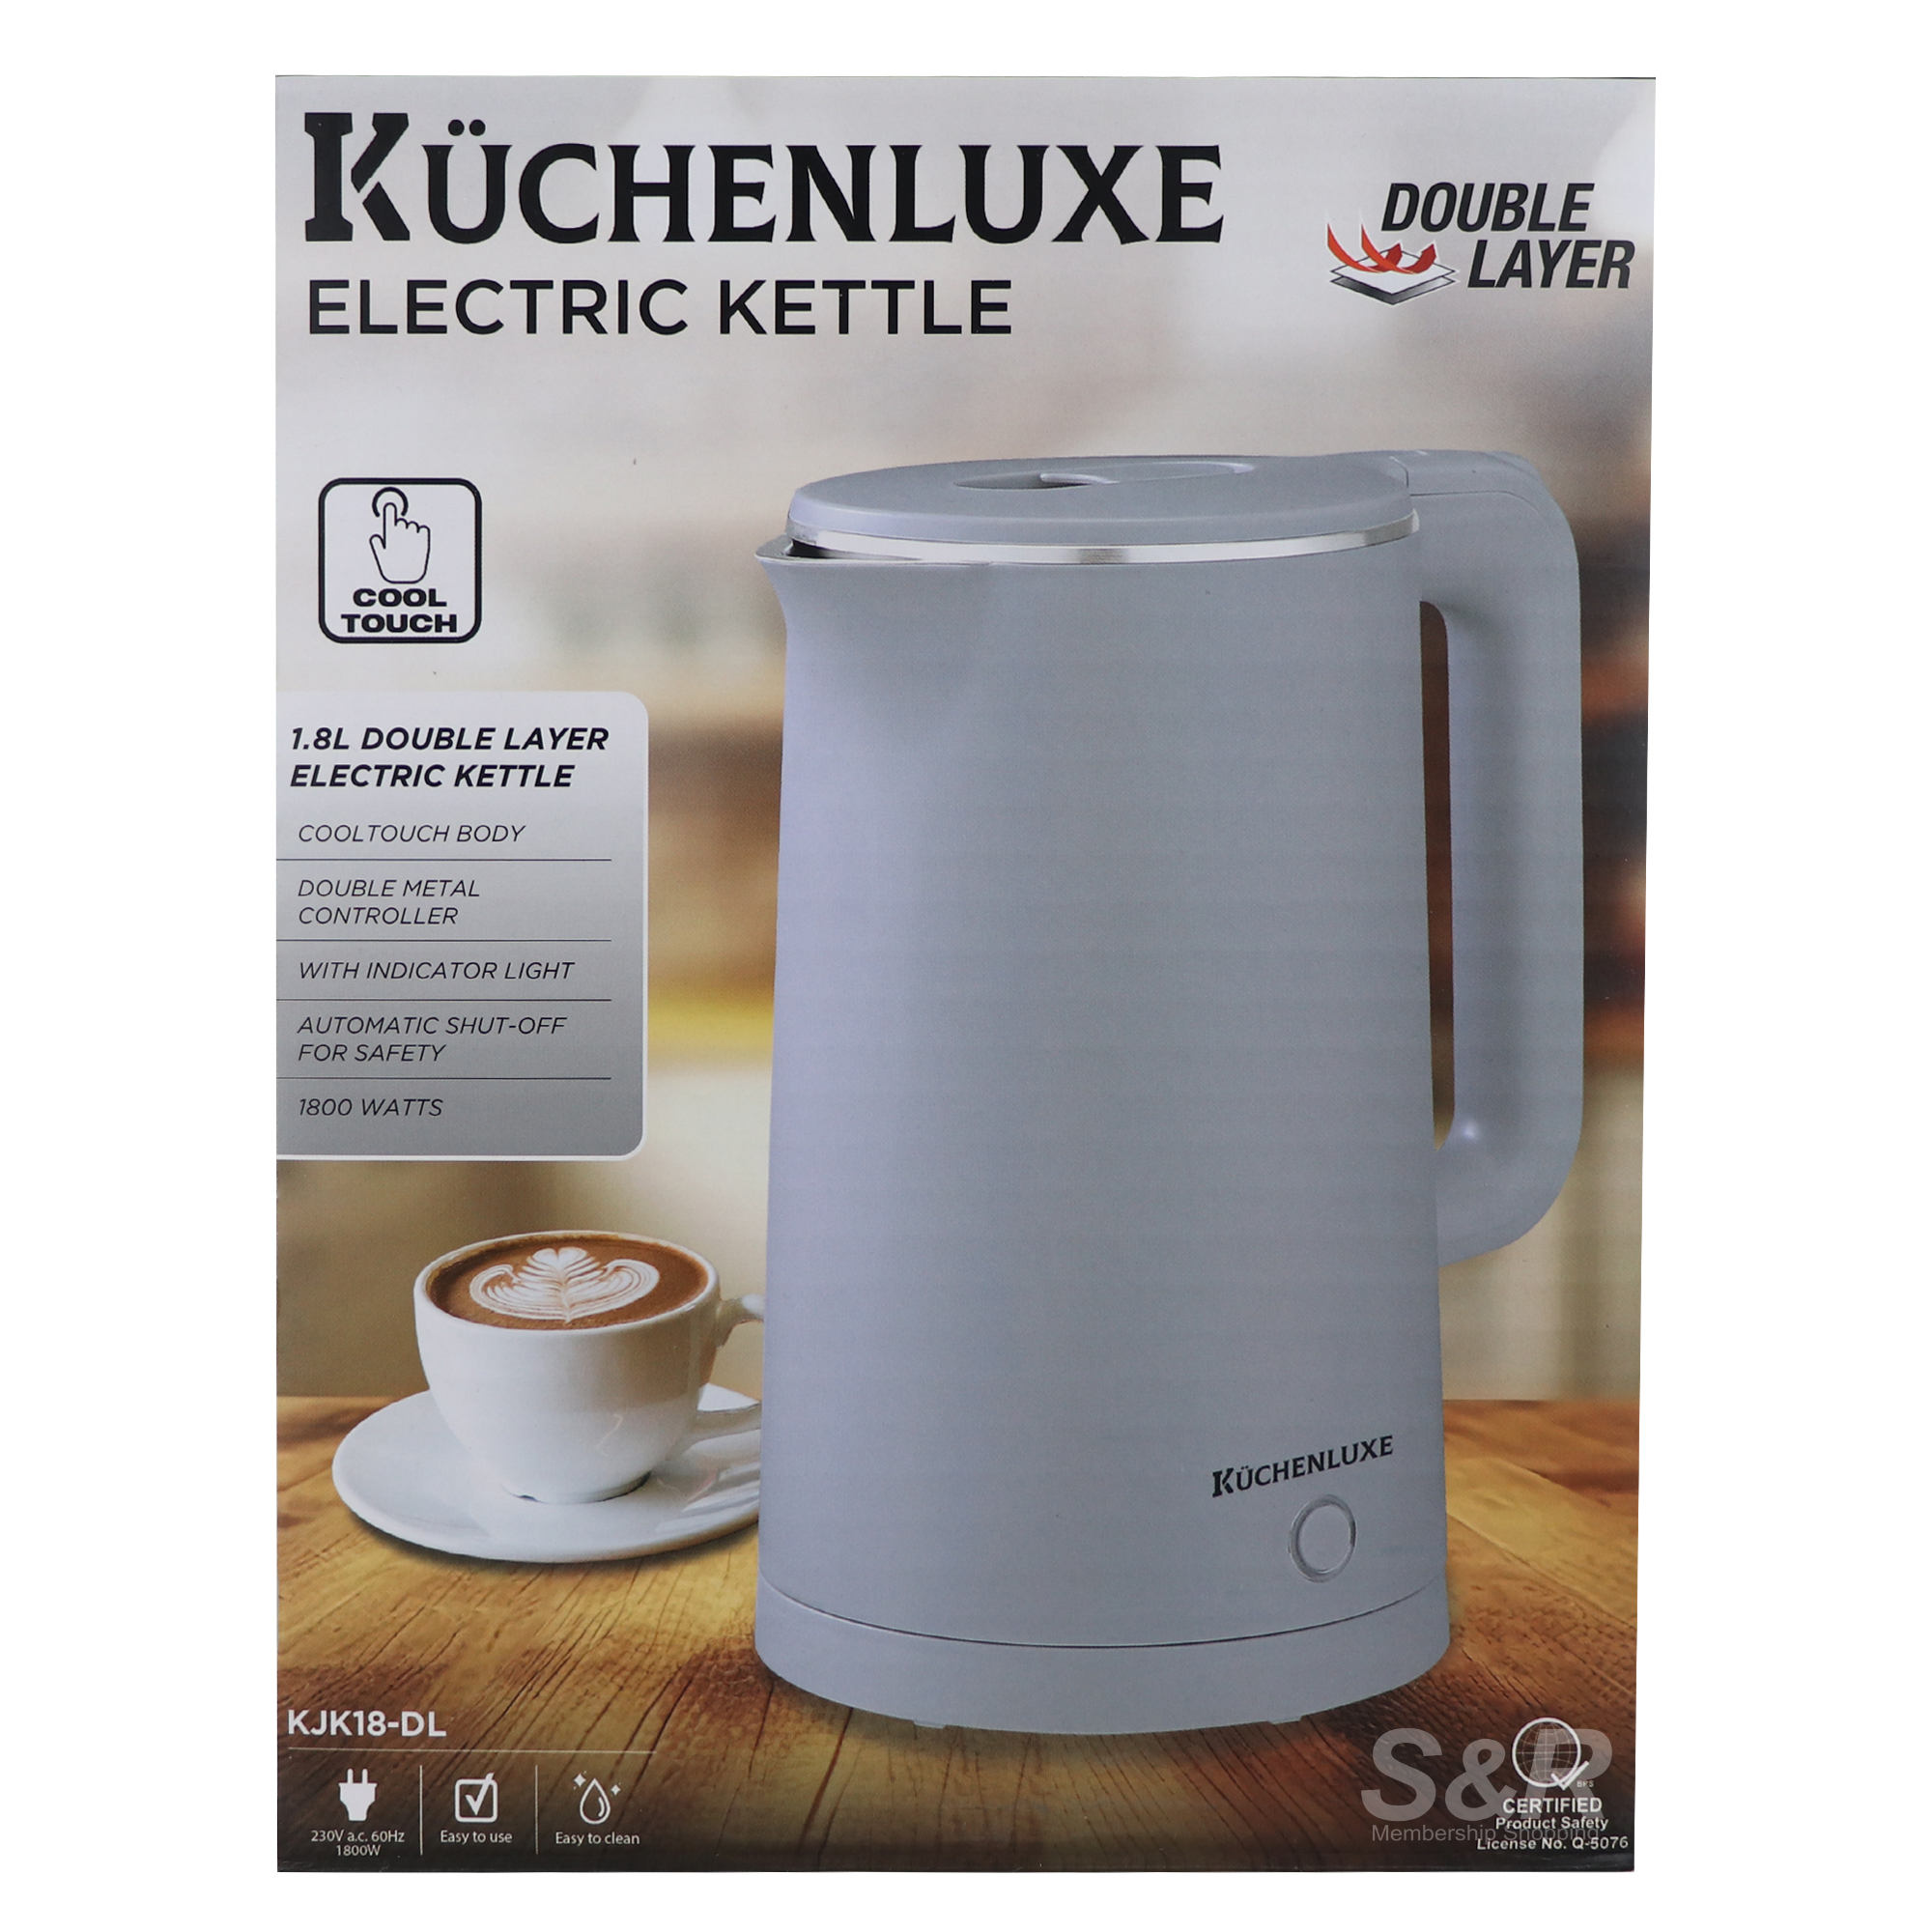 Kuchenluxe Double Layer Electric Kettle 1.8L KJK18-DL